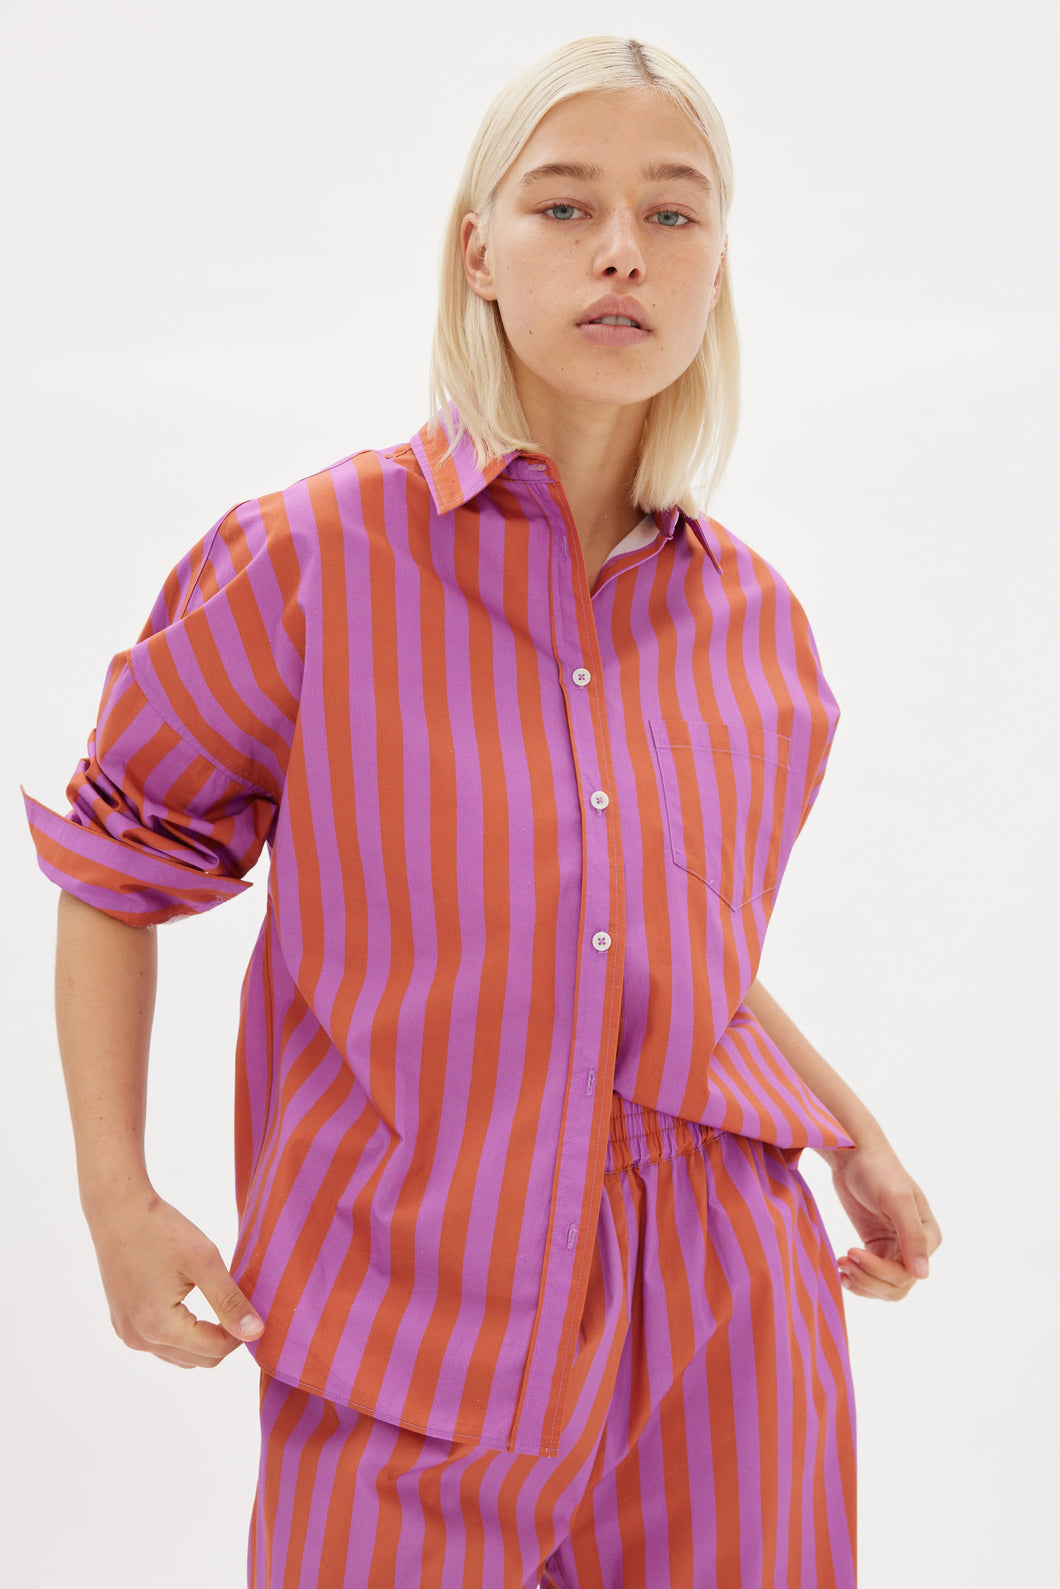 Chiara Classic Stripe Shirt in Fuchsia/Rust by LMND